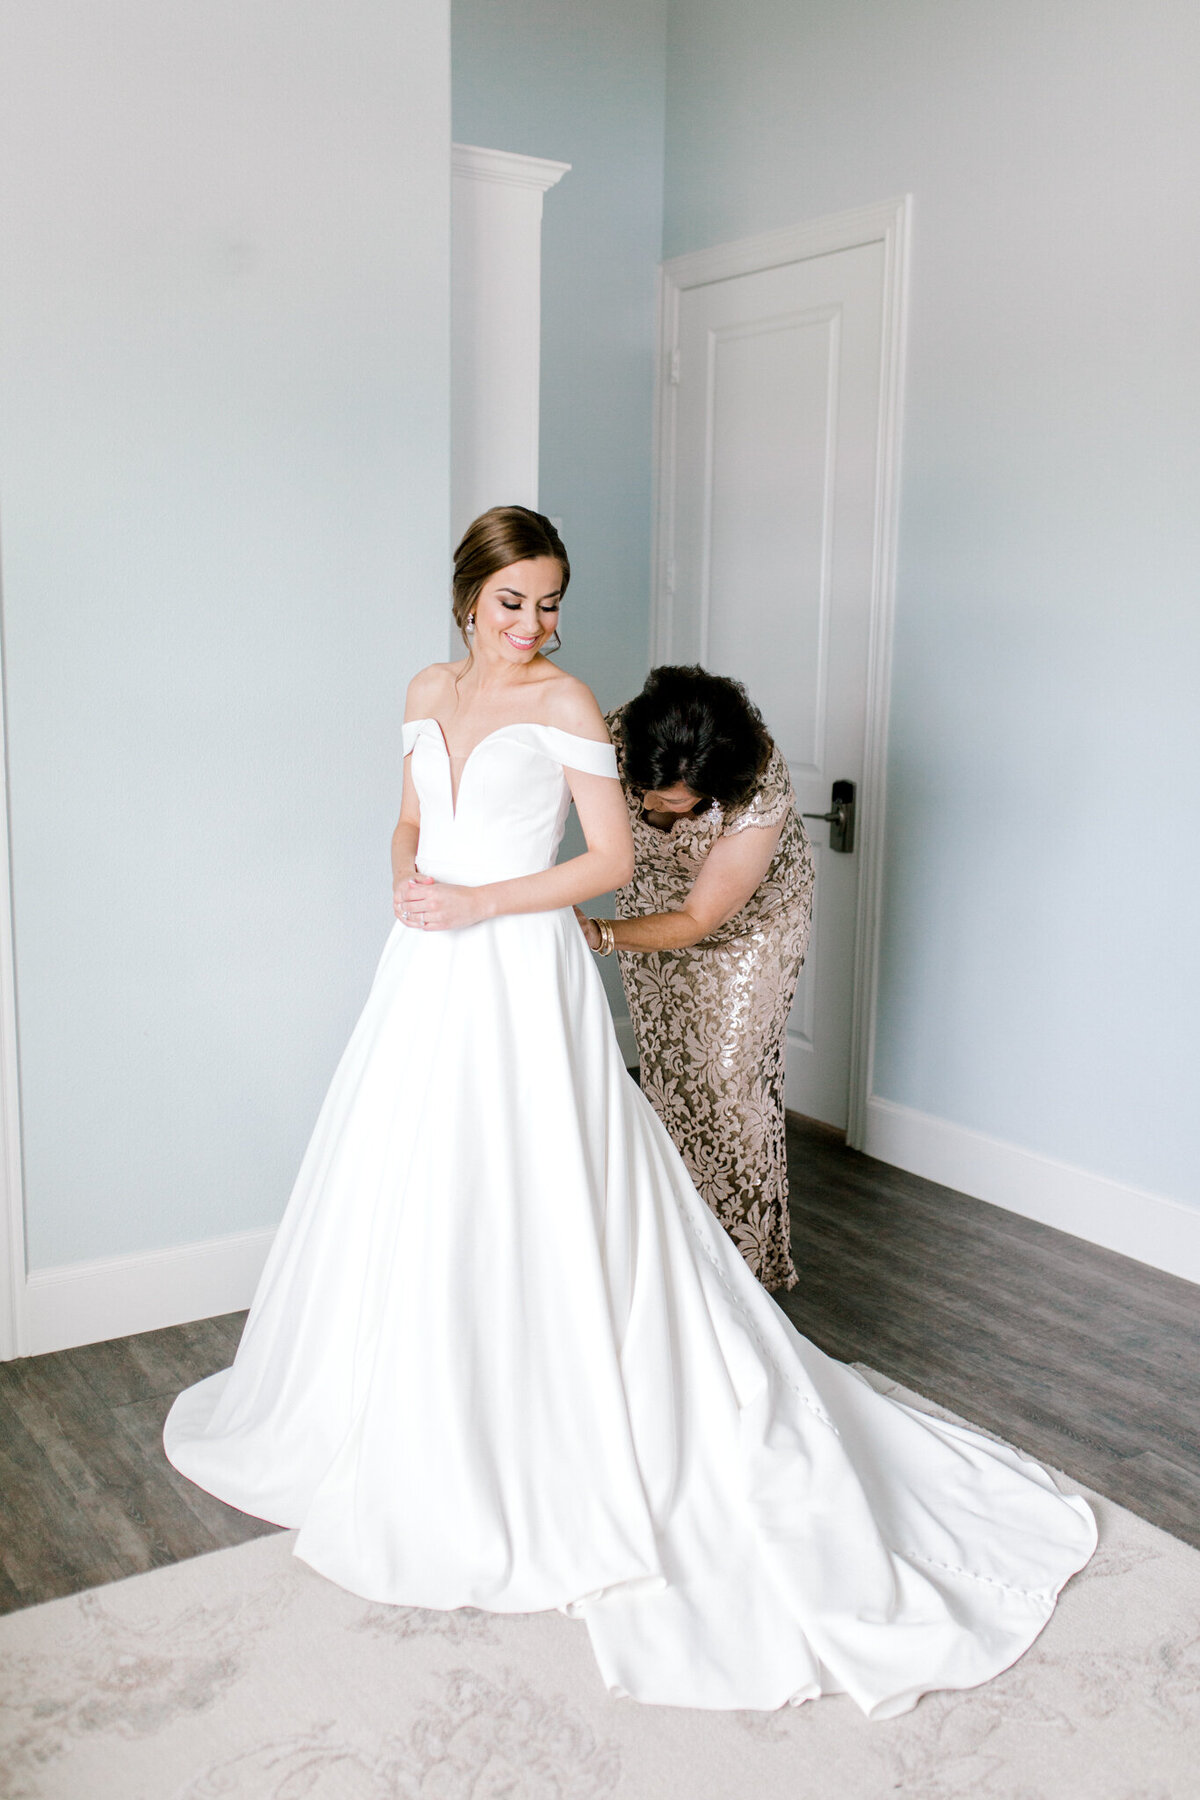 Lexi Broughton & Garrett Greer Wedding at Dove Ridge Vineyards | Sami Kathryn Photography | Dallas Wedding Photography-30